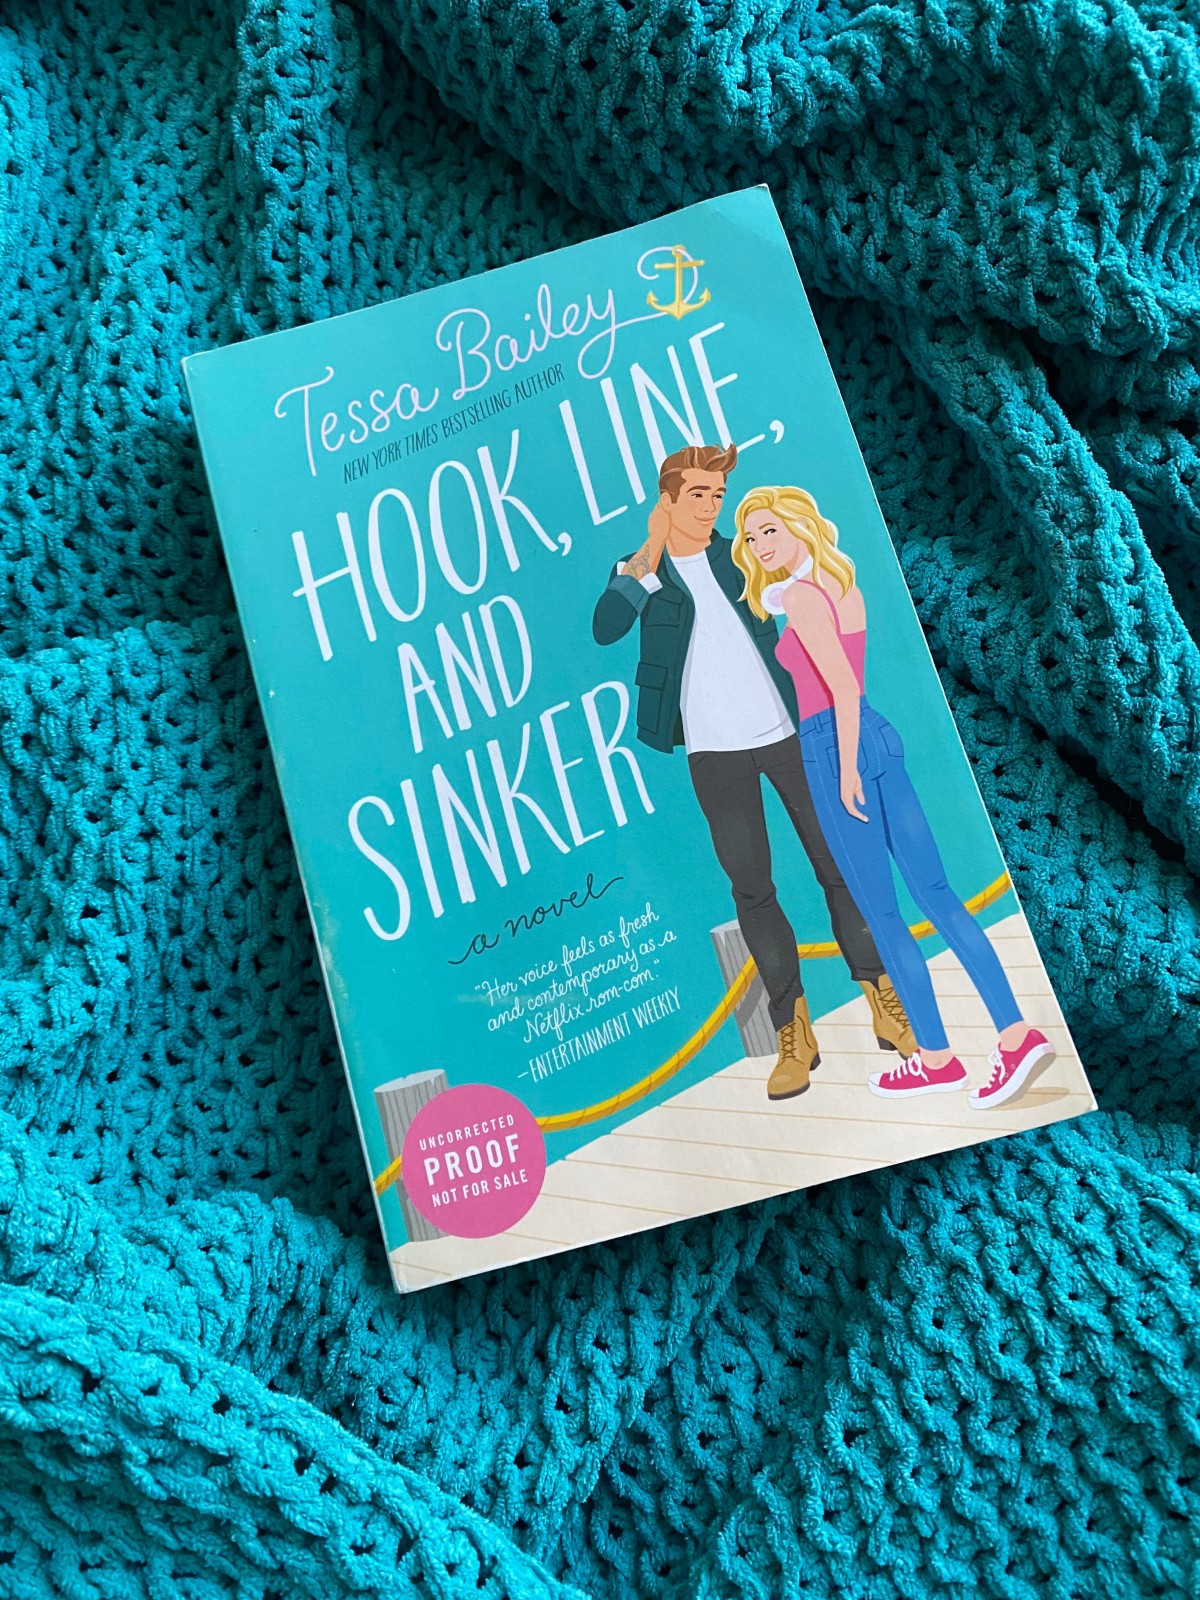 Tessa Bailey Catches Us “Hook, Line, & Sinker”